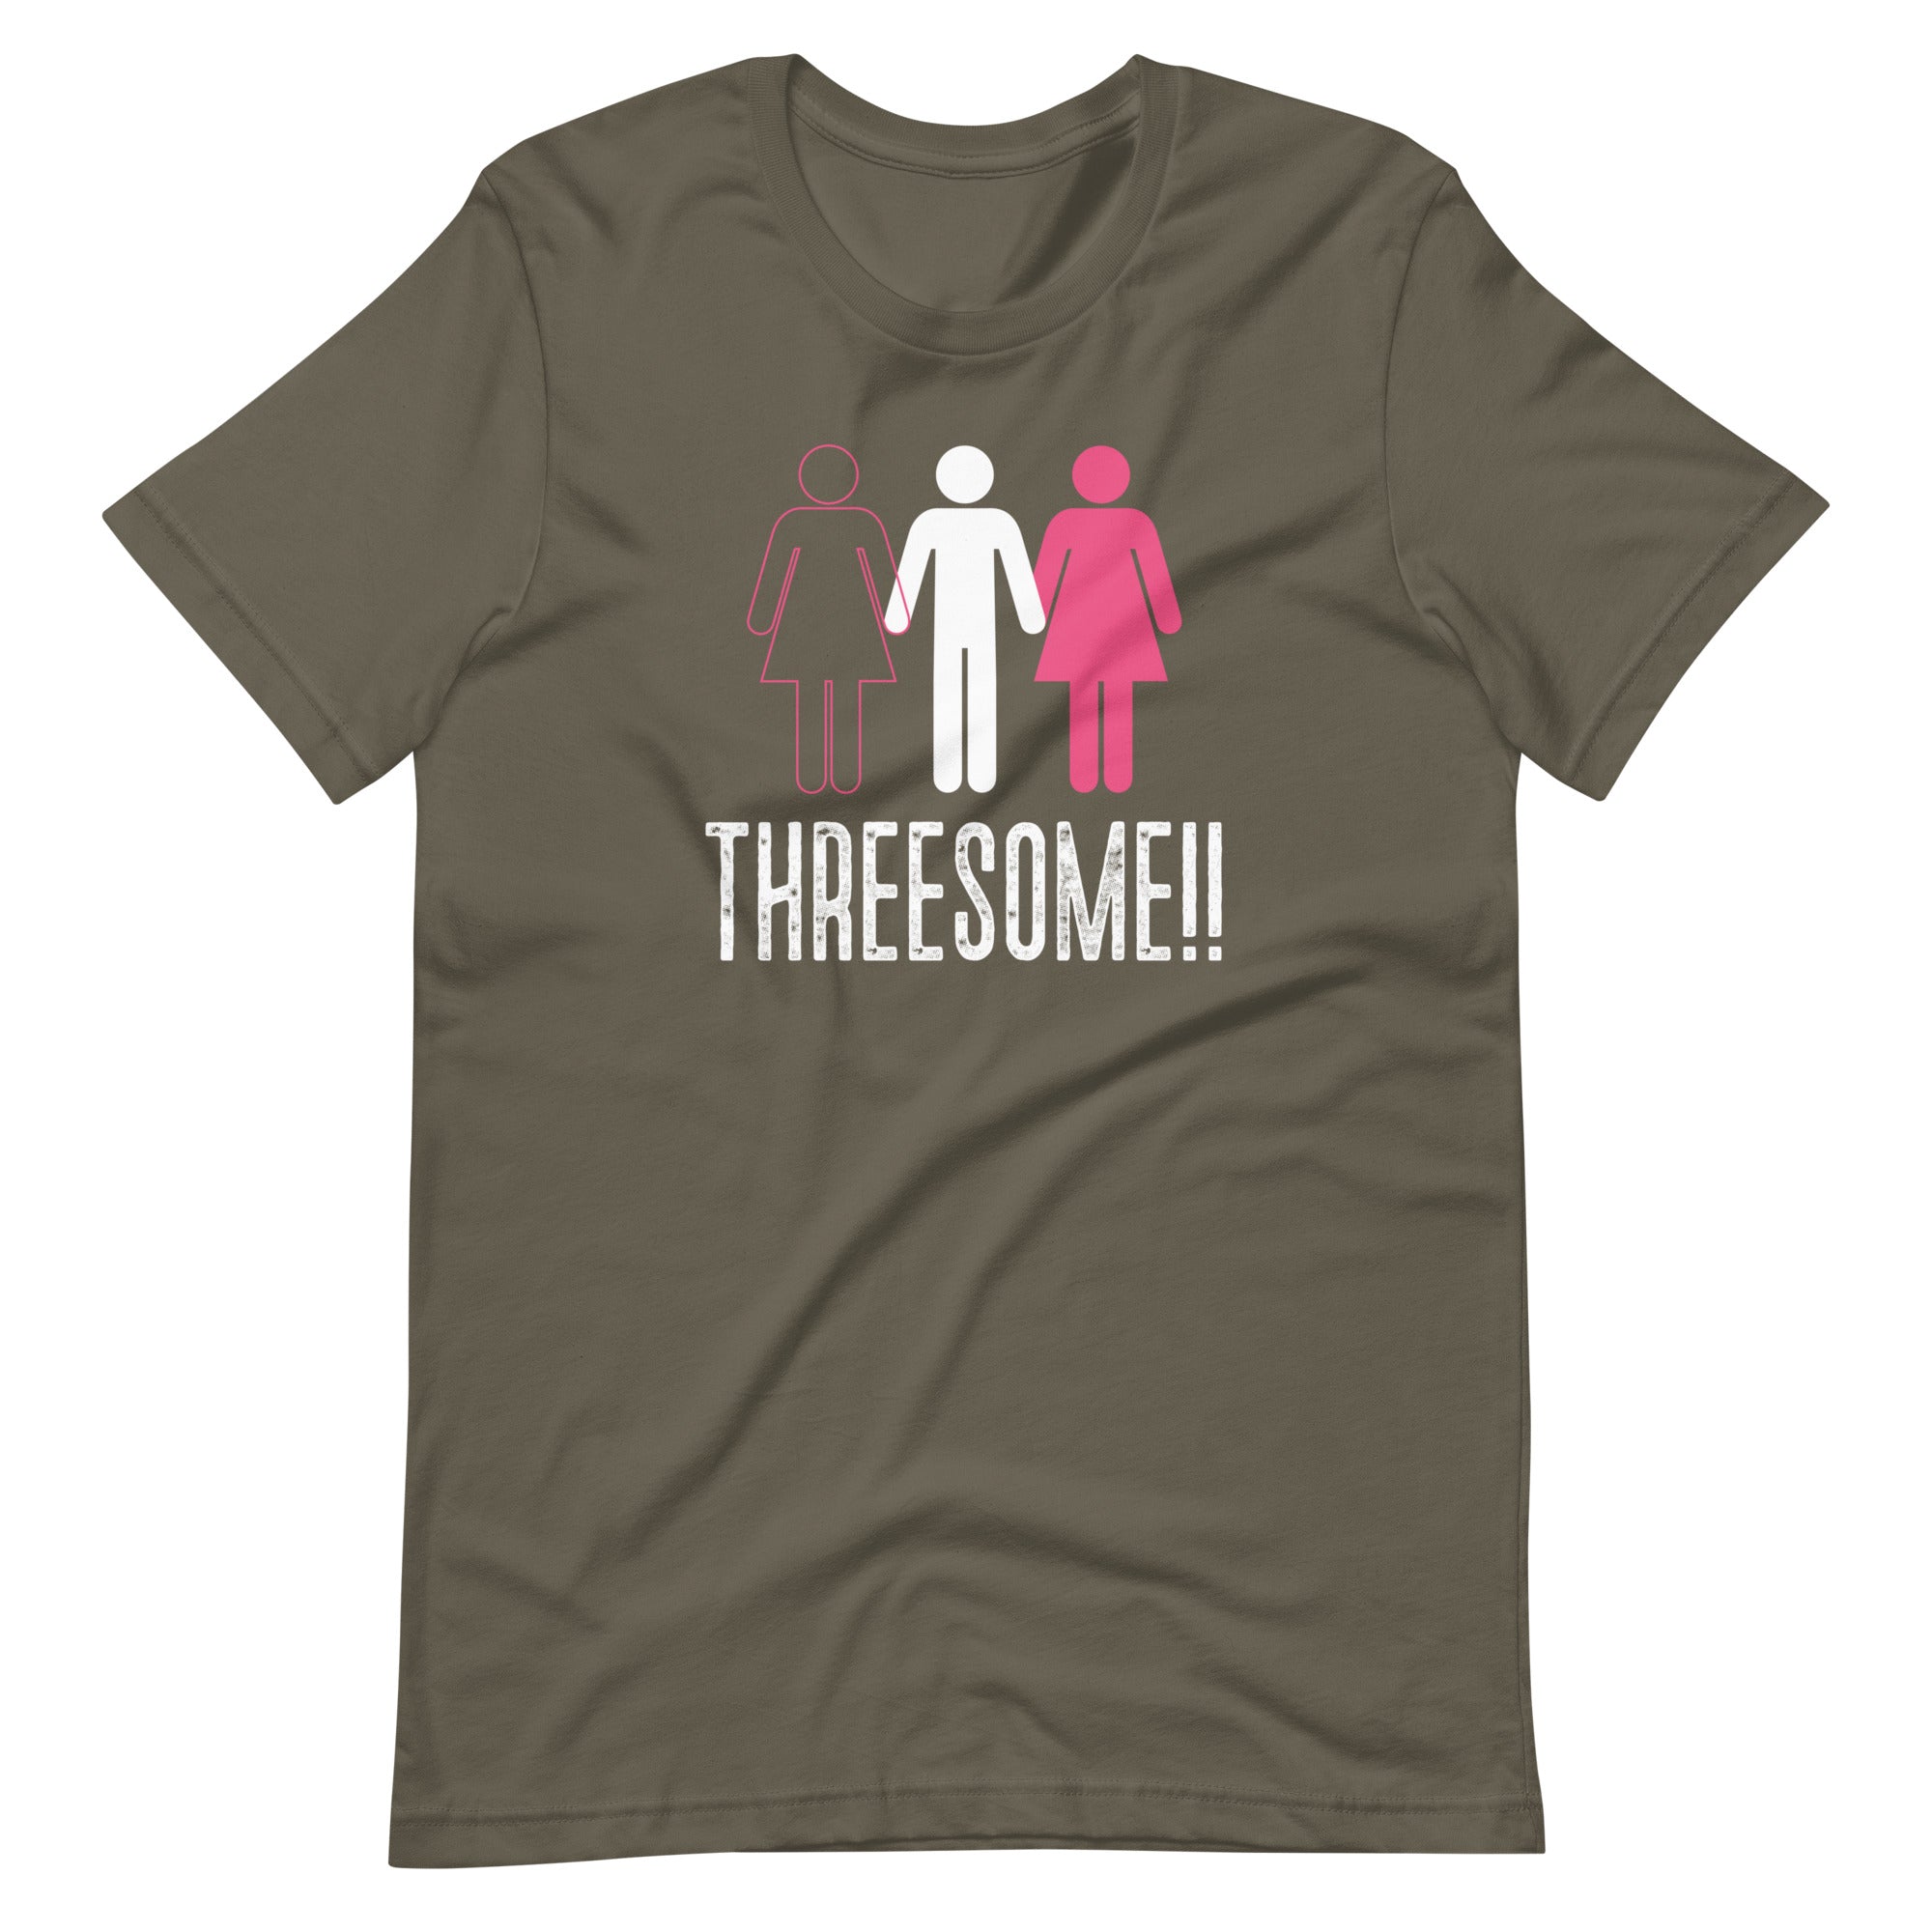 Mike Sorrentino Threesome Shirt